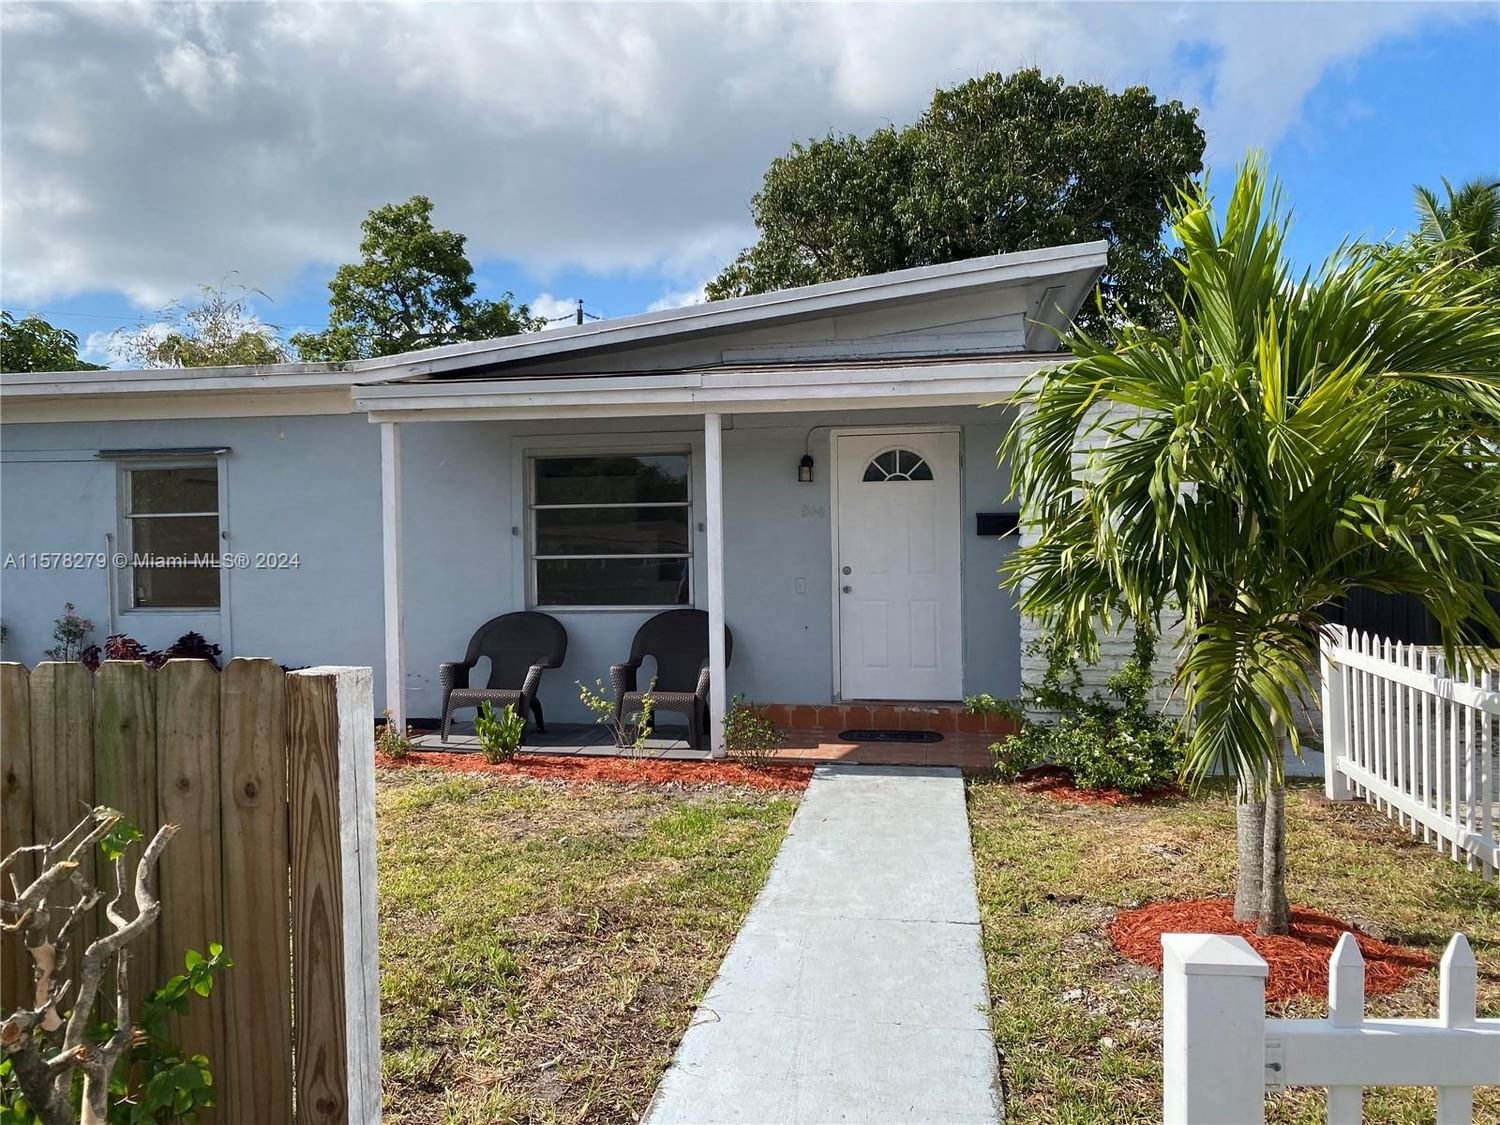 Real estate property located at 540 Opa Locka Blvd, Miami-Dade County, NICHOLS HEIGHTS, North Miami, FL